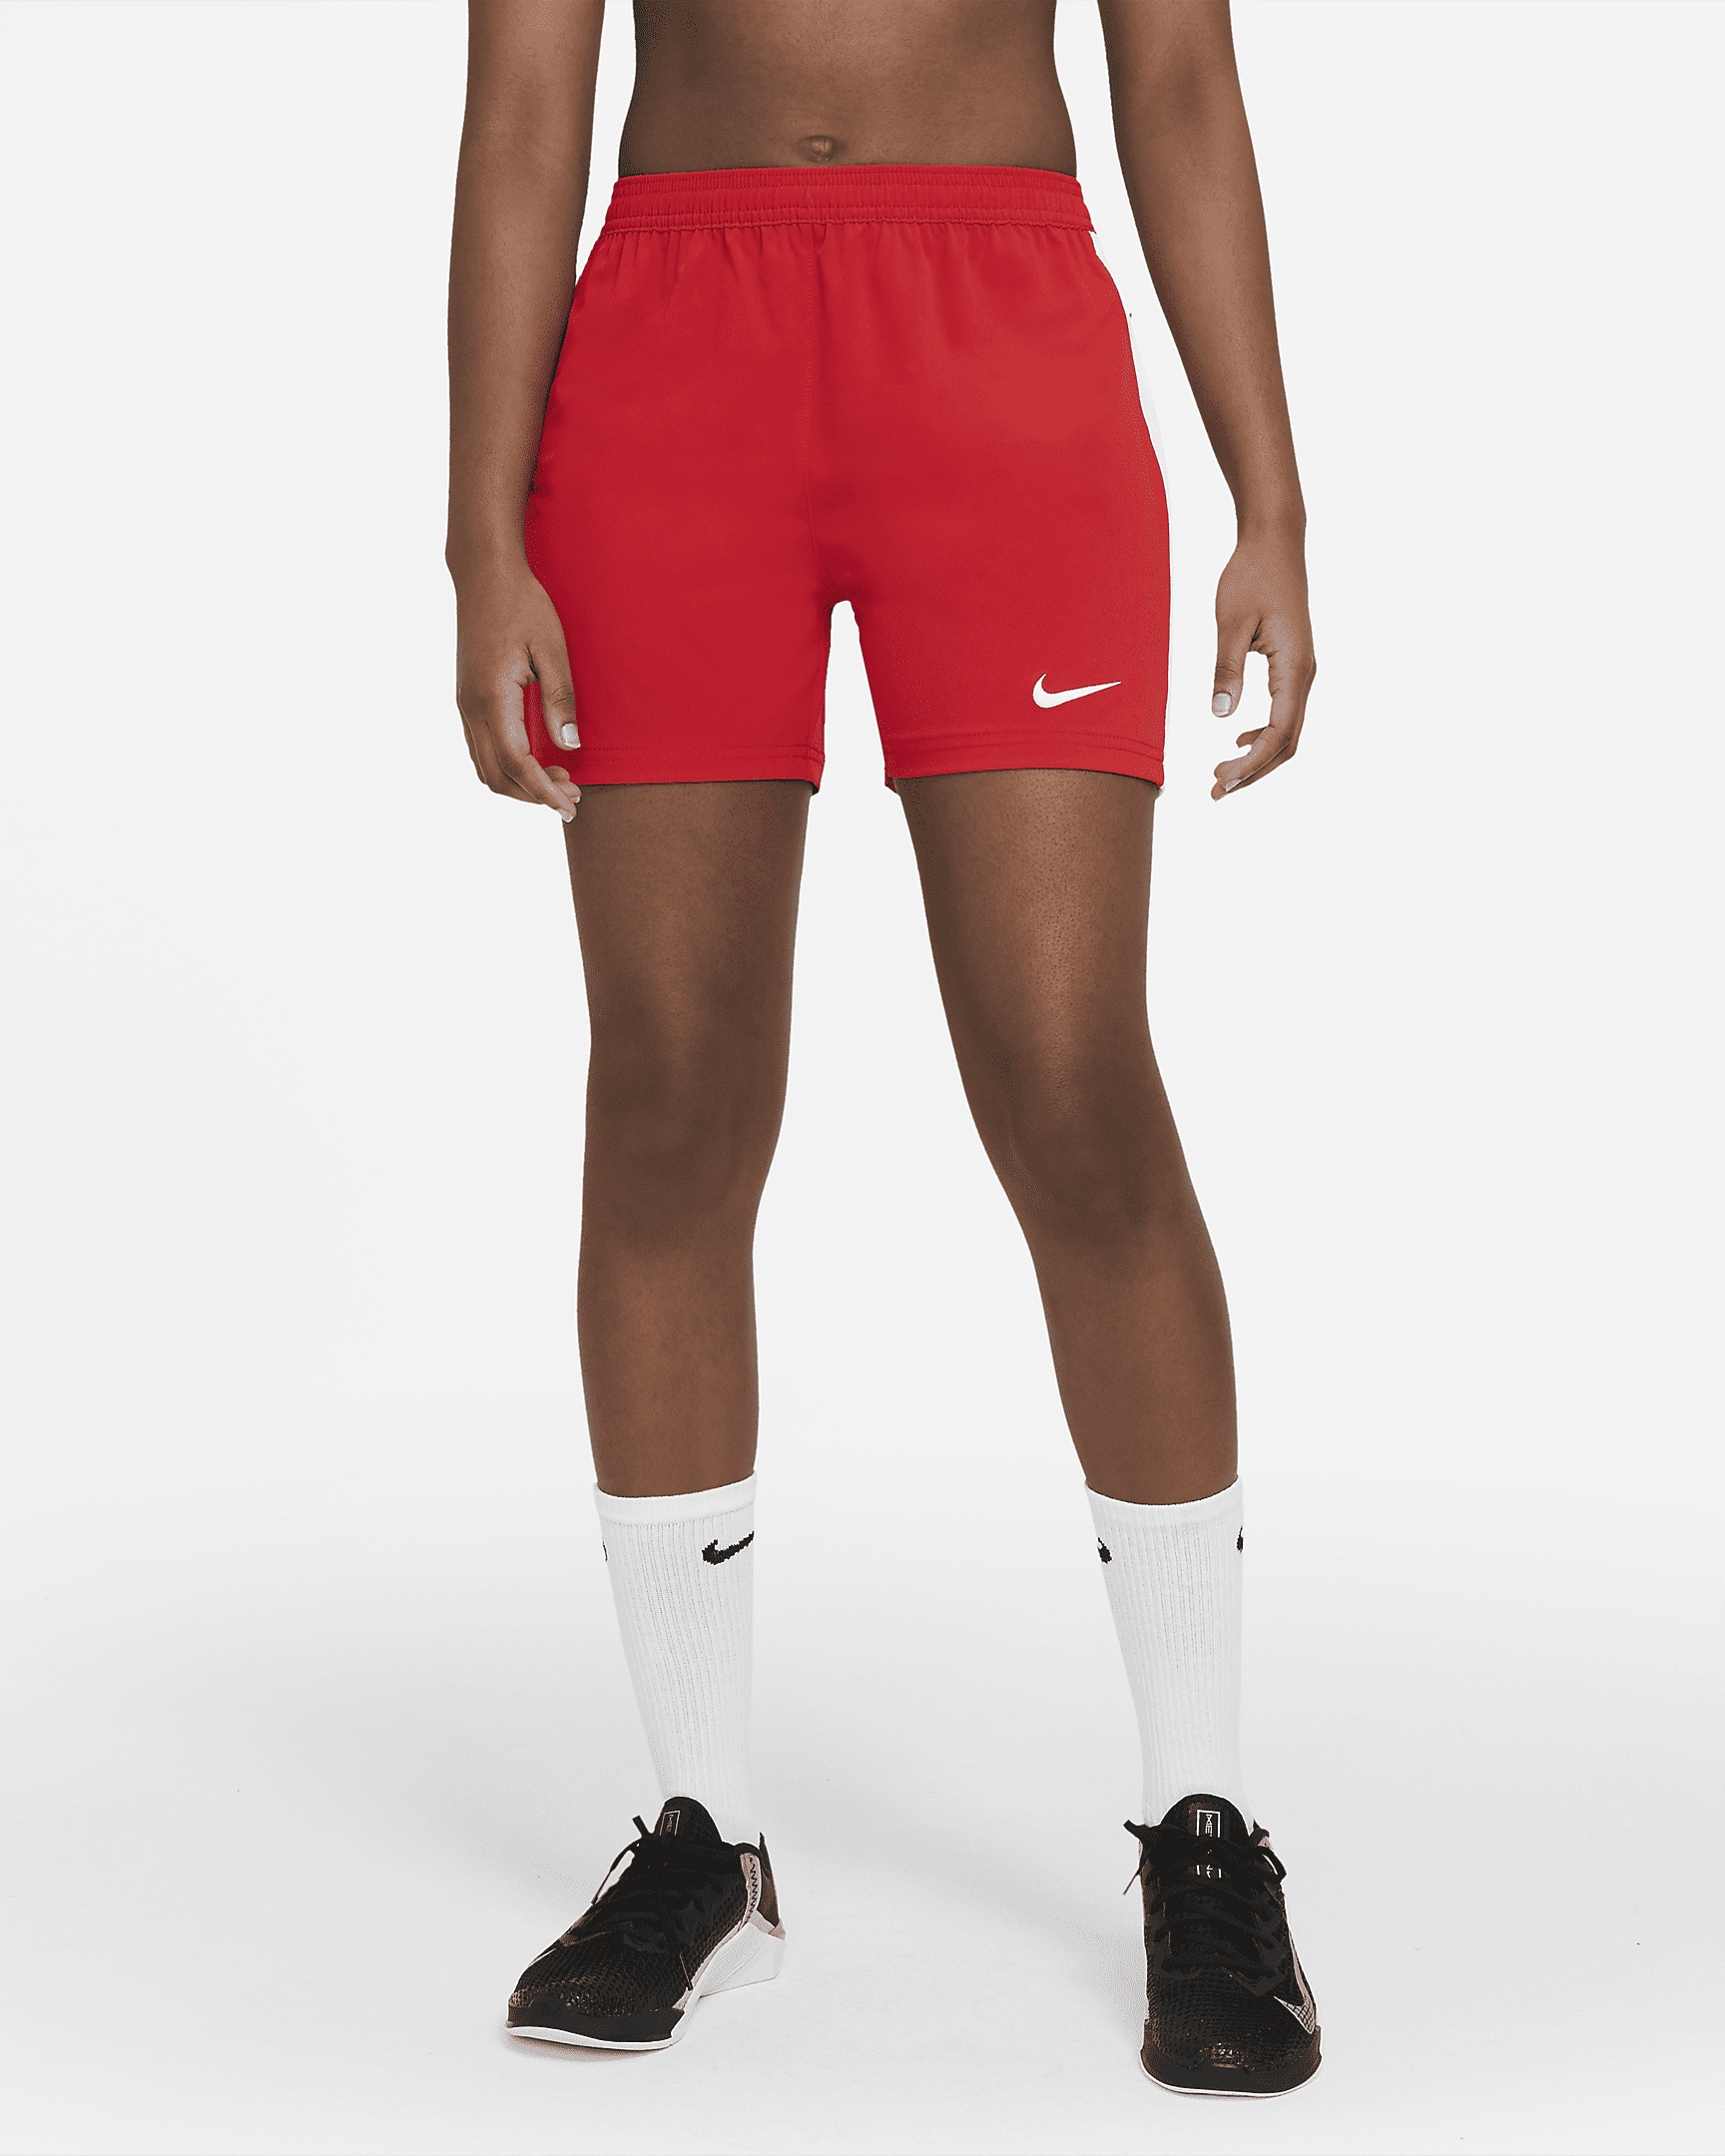 Nike Women's Vapor Flag Football Shorts - 1